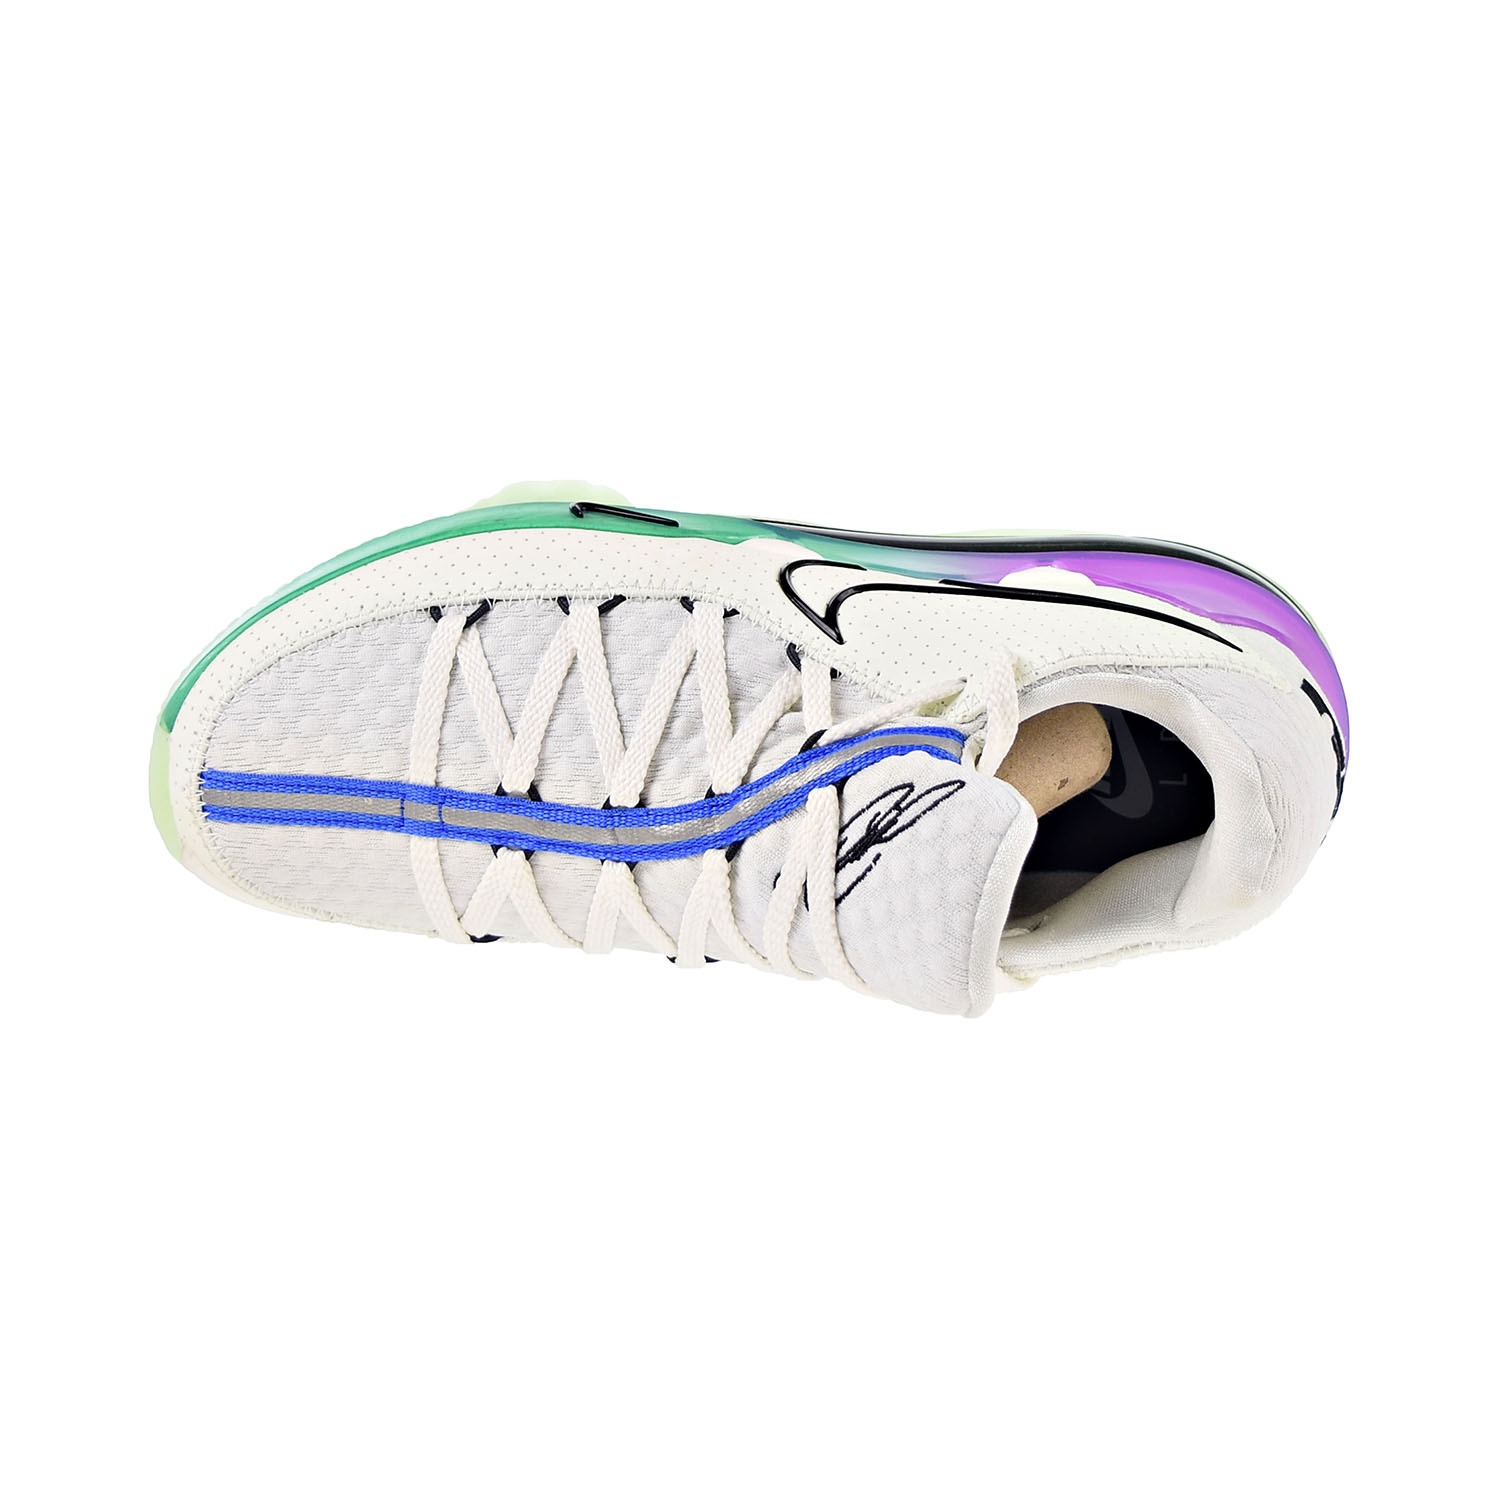 Nike Lebron XVII Low "Glow In The Dark" Men's Shoes Spruce Aura-Black Racer Blue cd5007-005 - image 5 of 6